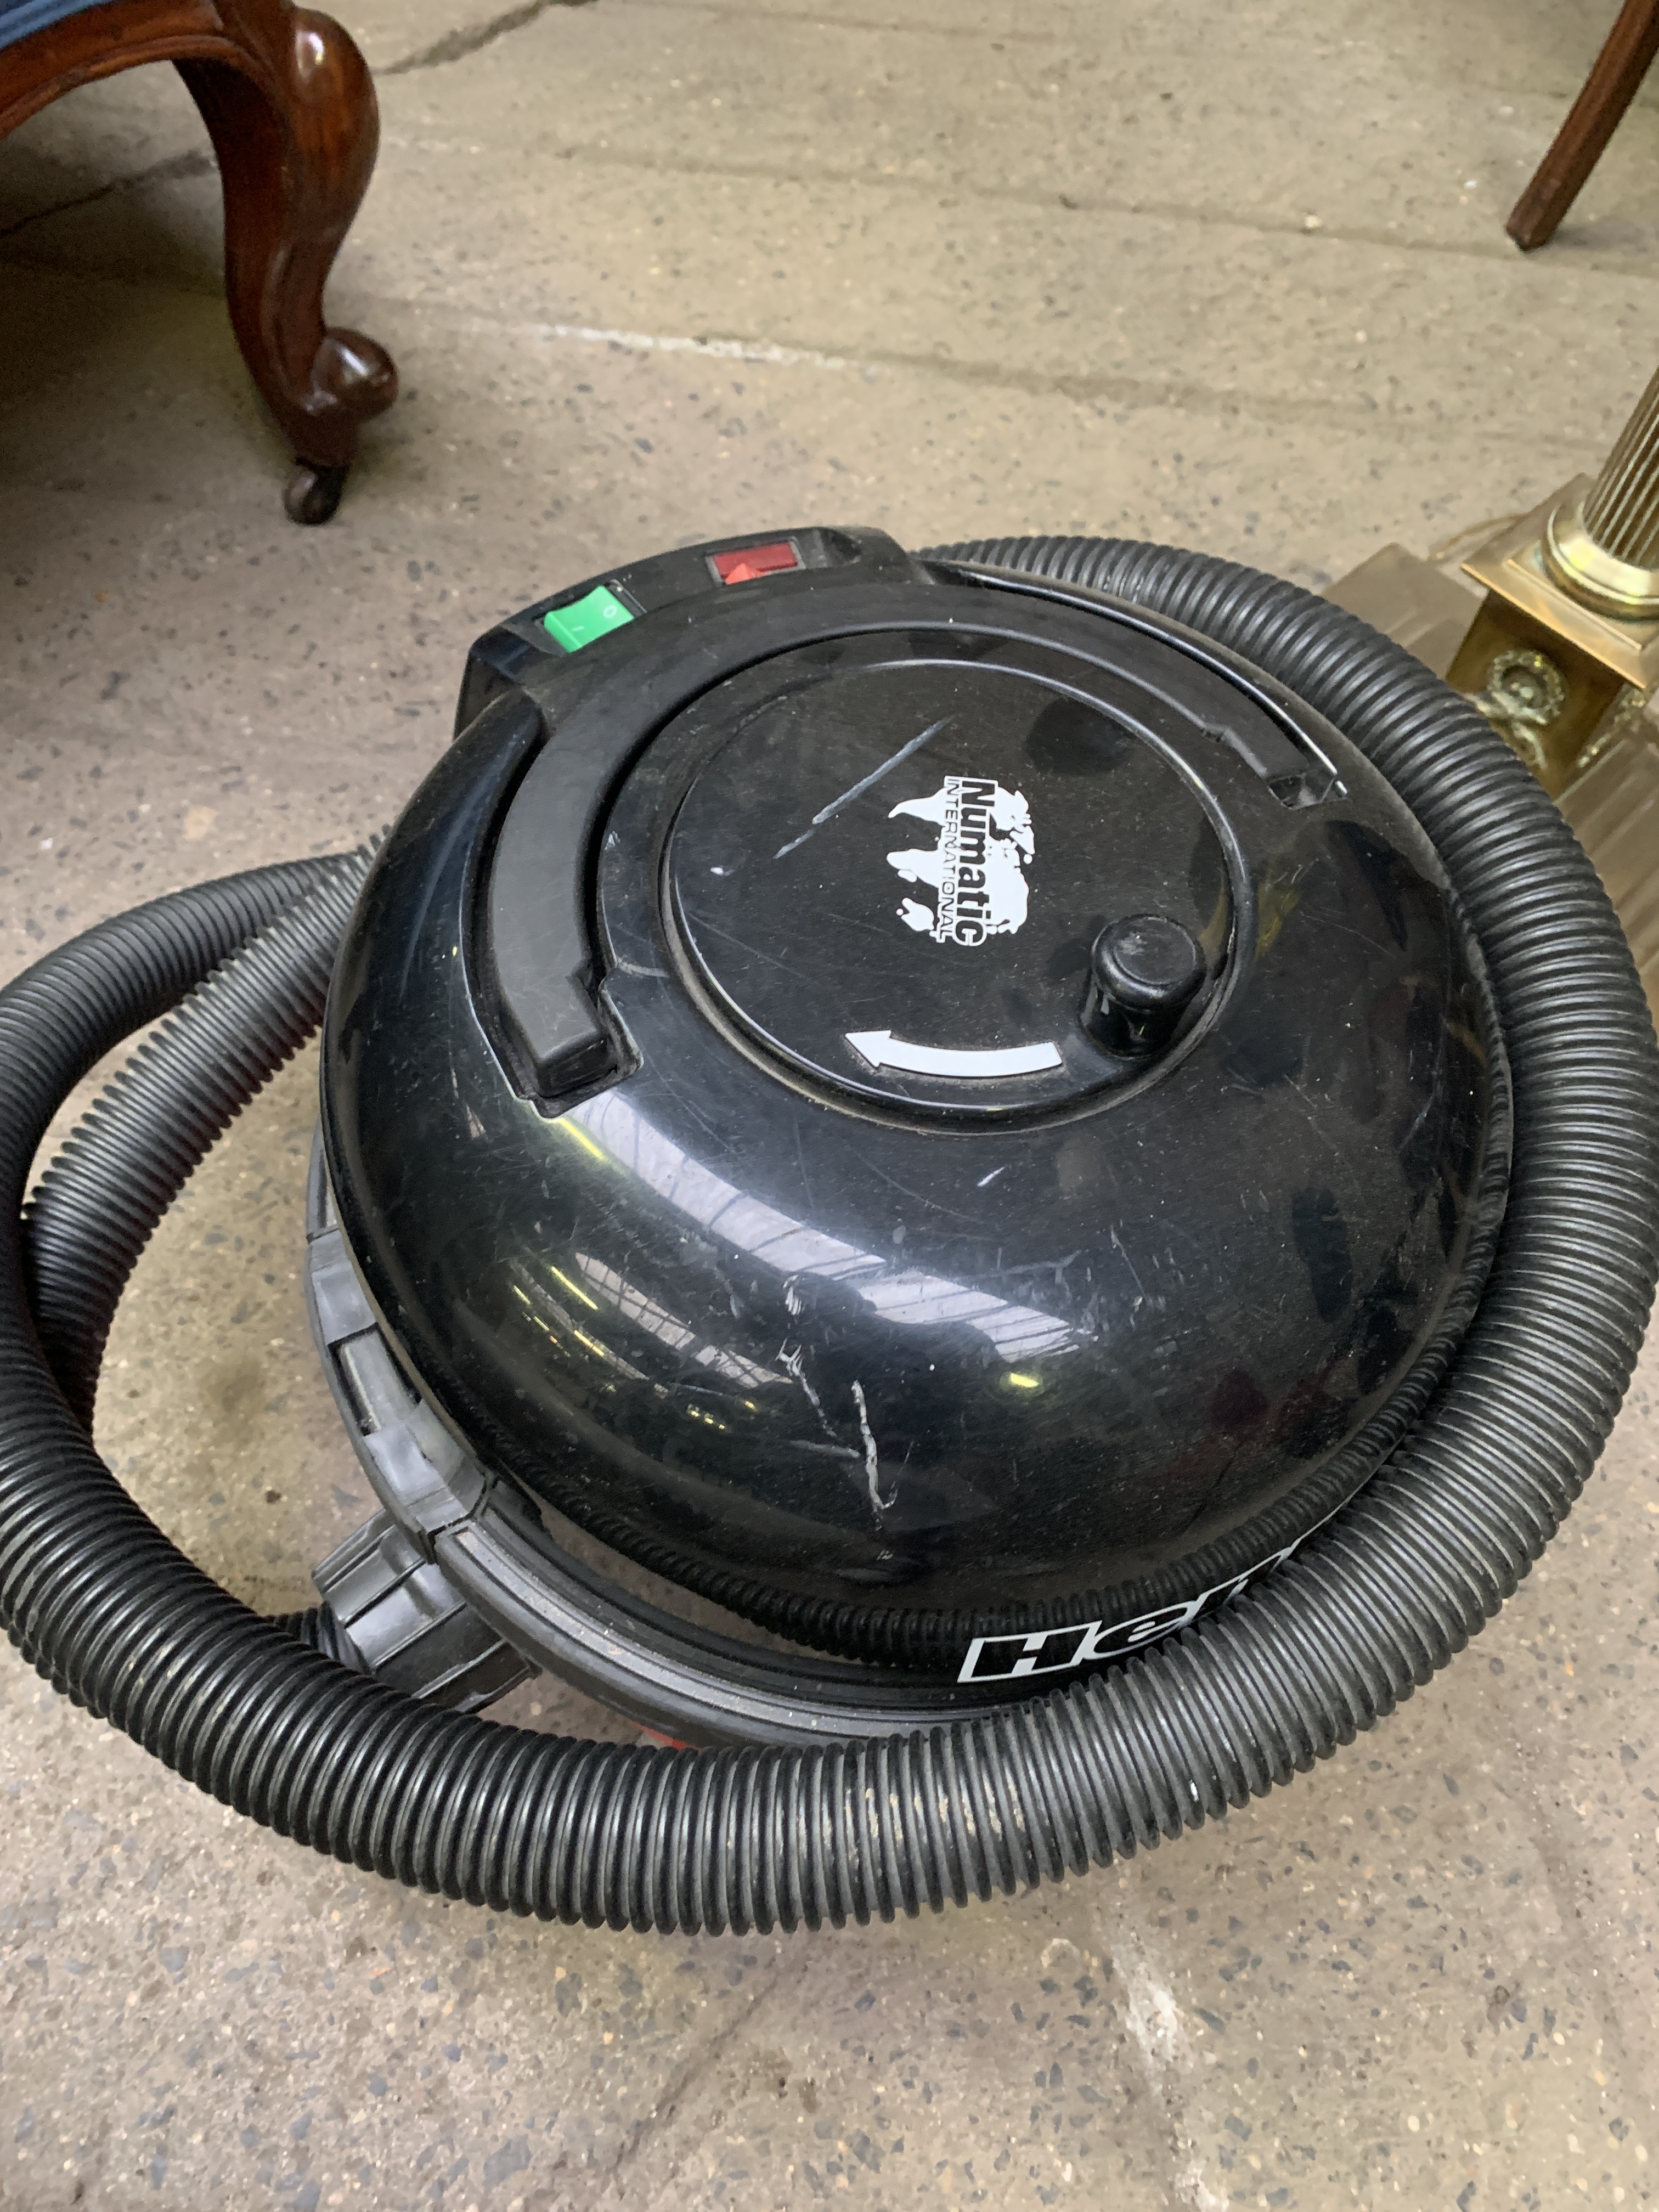 'Henry' vacuum cleaner in working order - Image 3 of 4